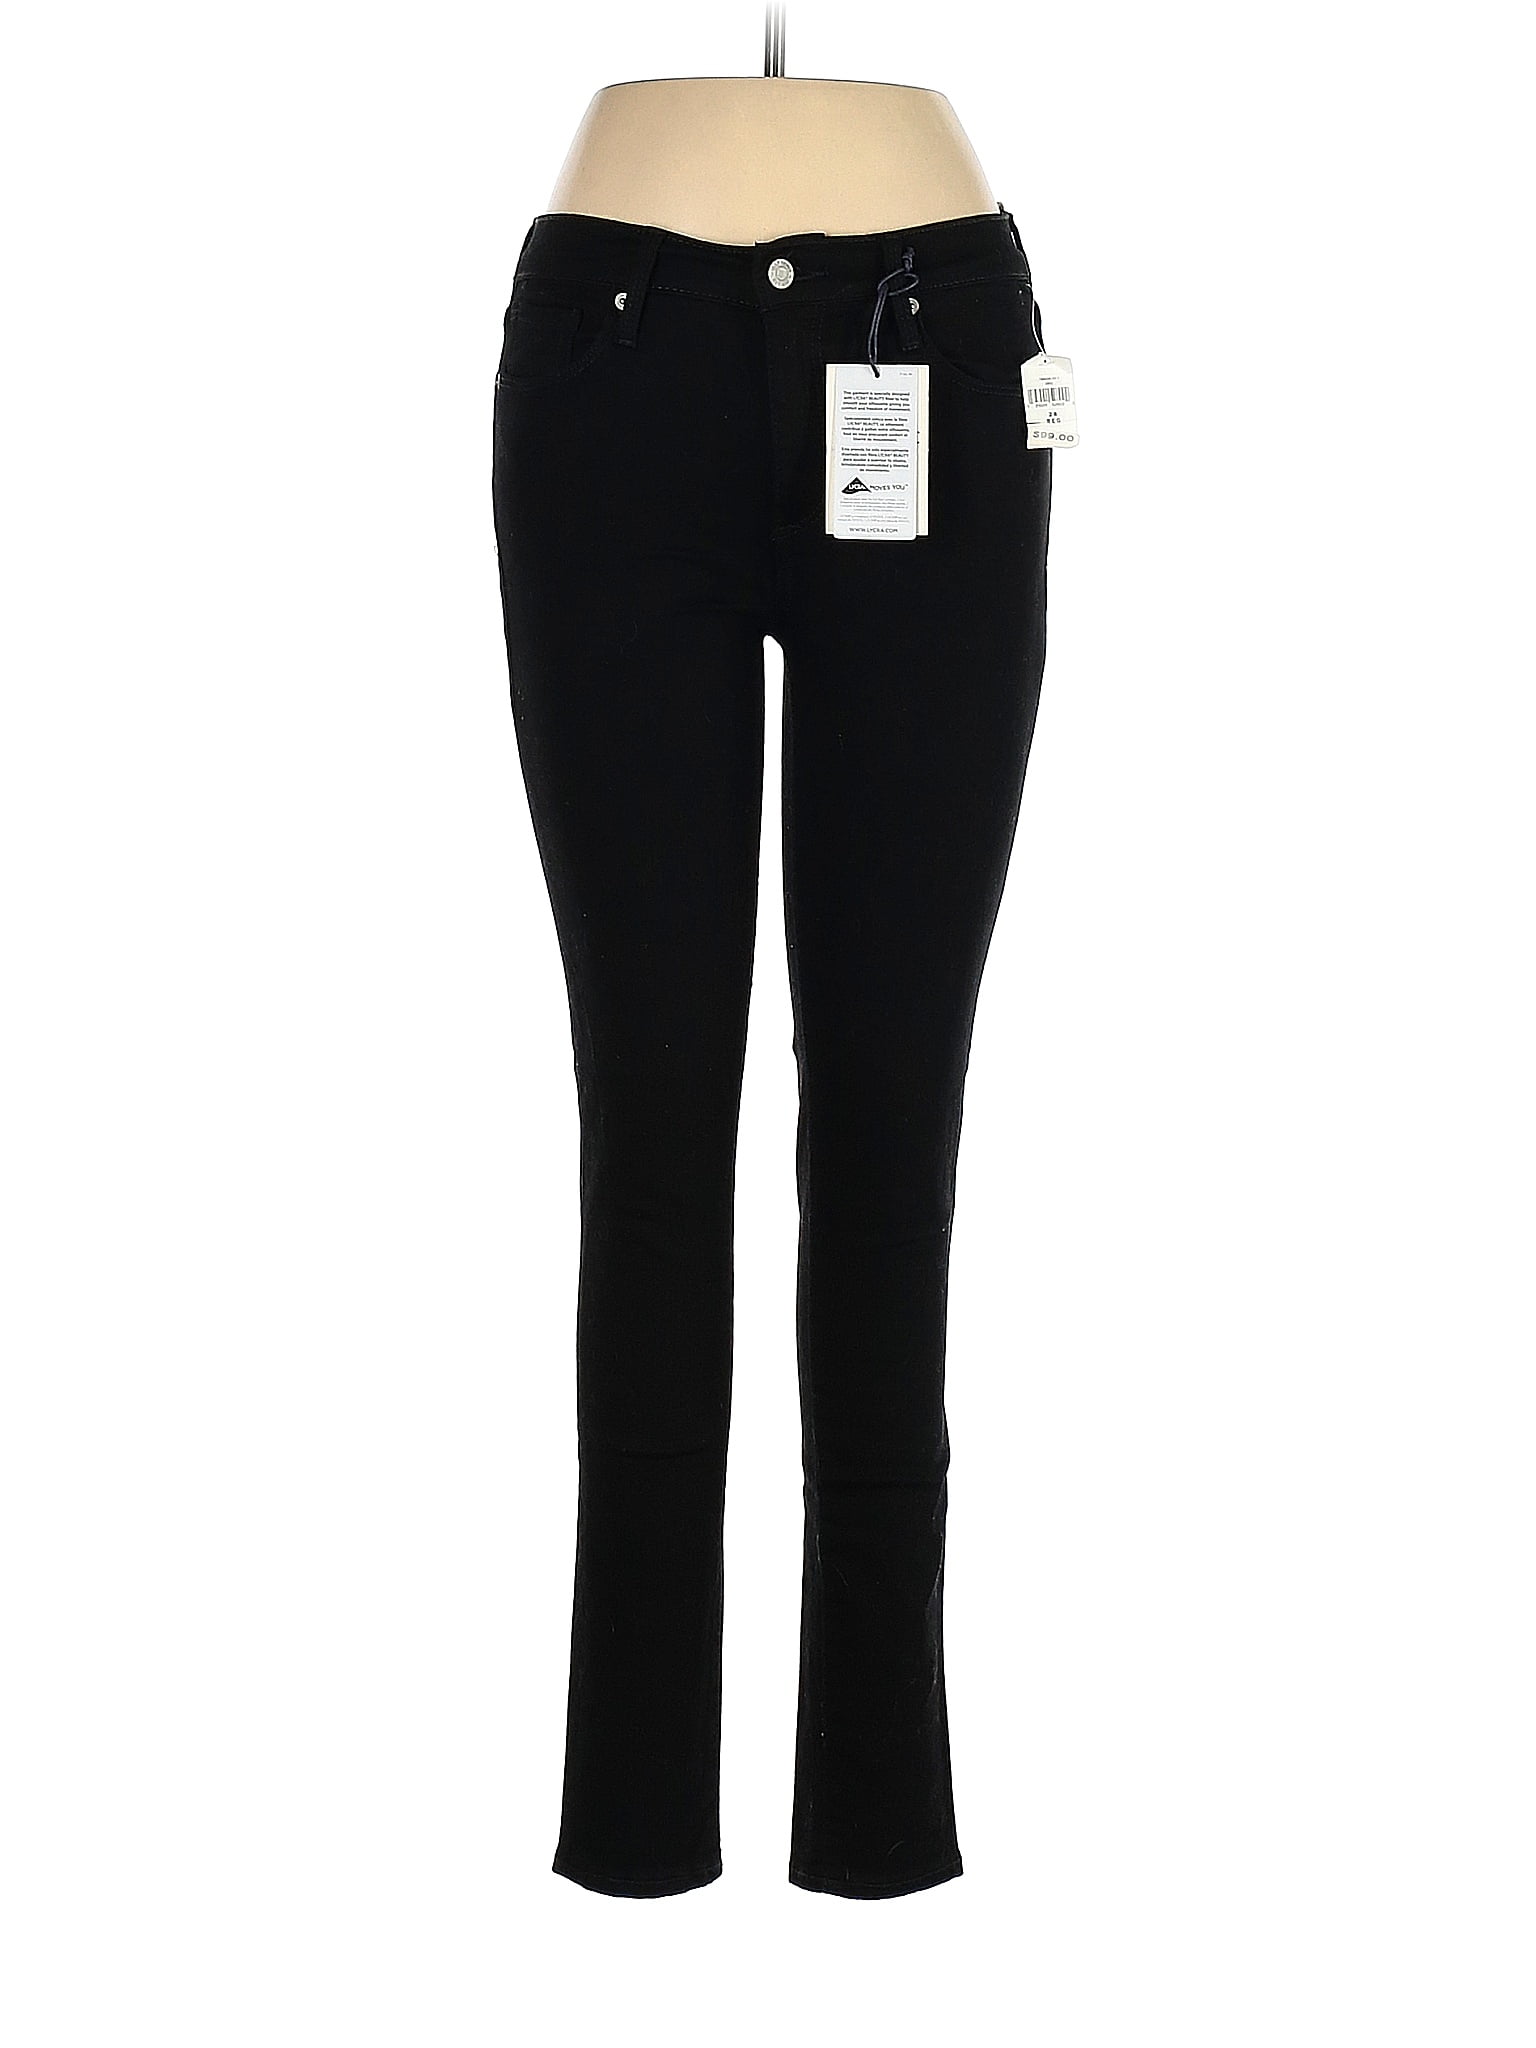 Gap Solid Black Jeans 28 Waist - 76% off | thredUP